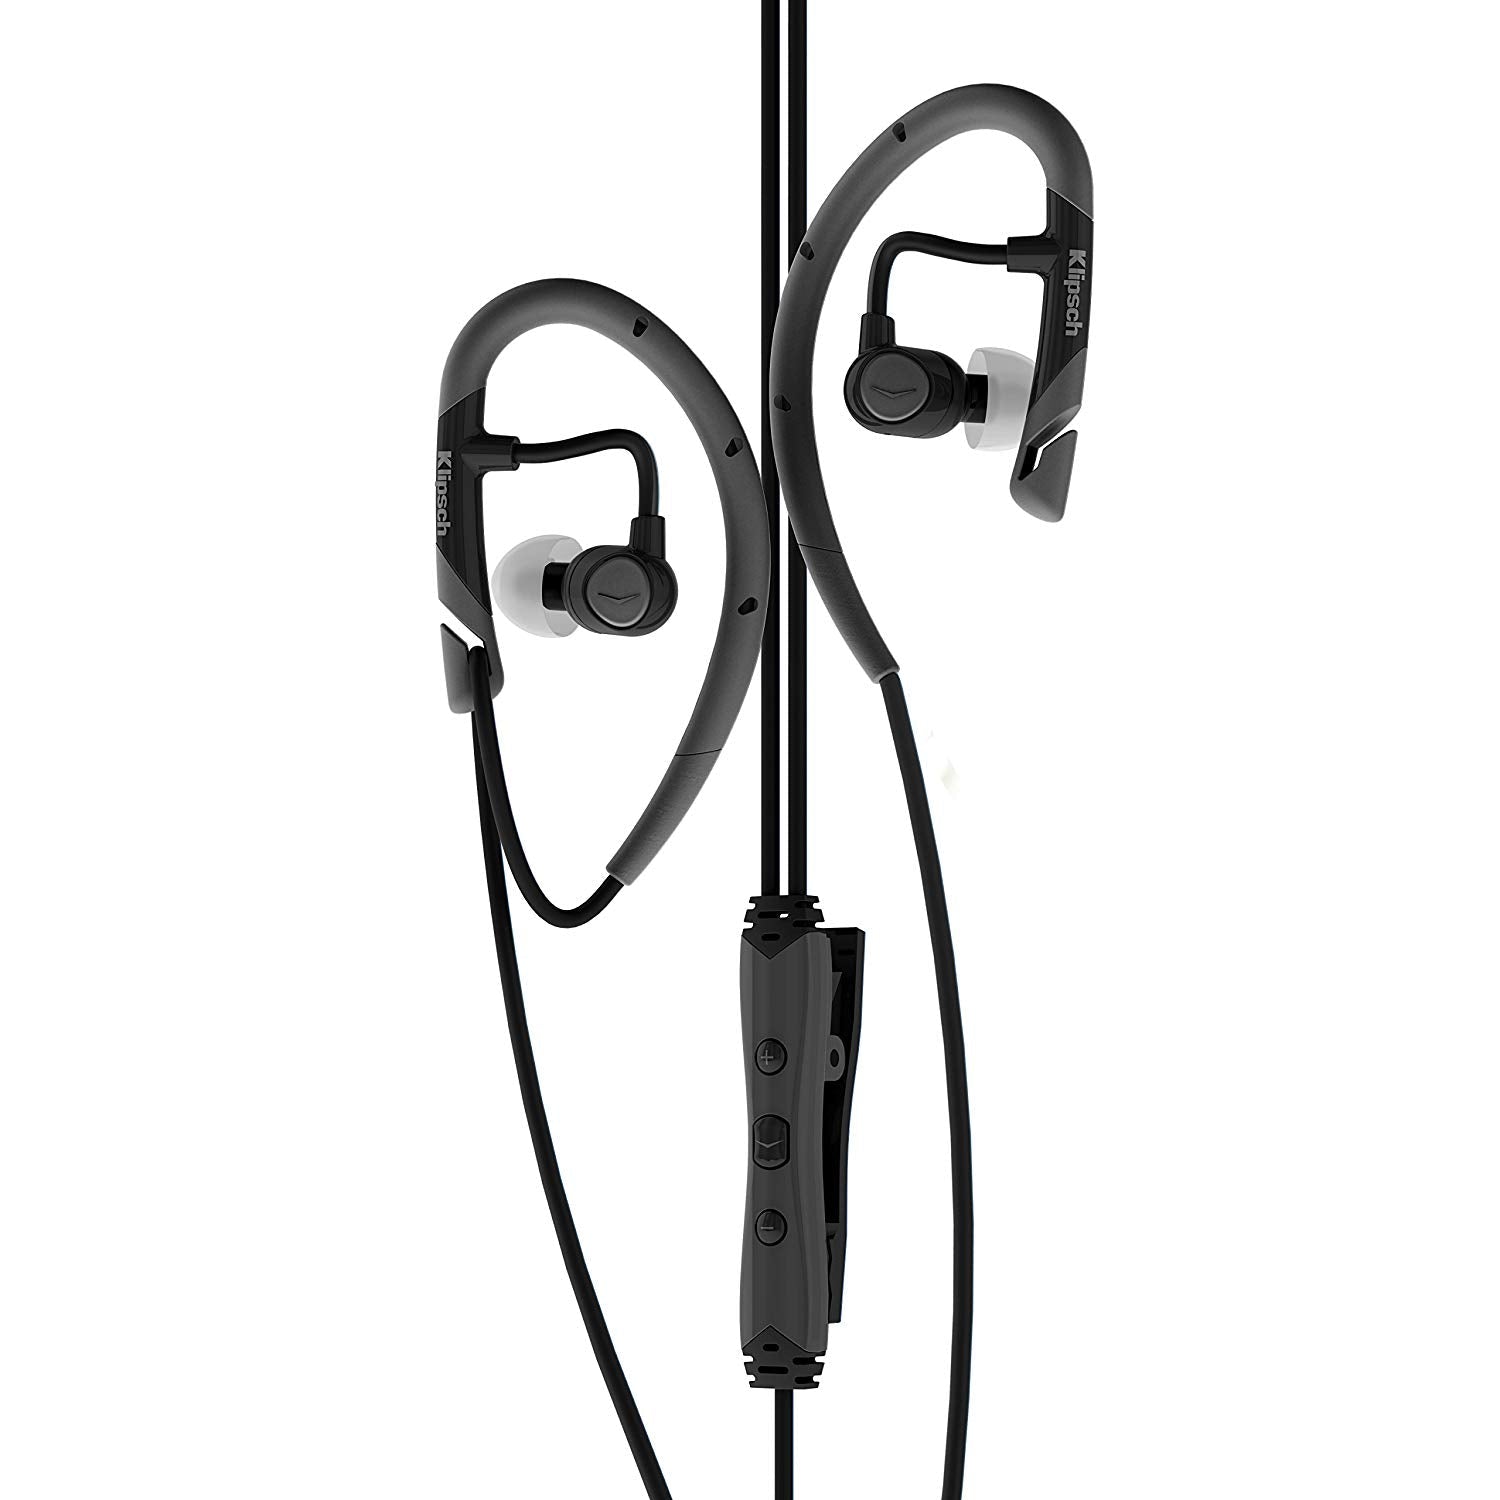 NEW Klipsch AS-5i Sport In-Ear headphones -Microphone- Black